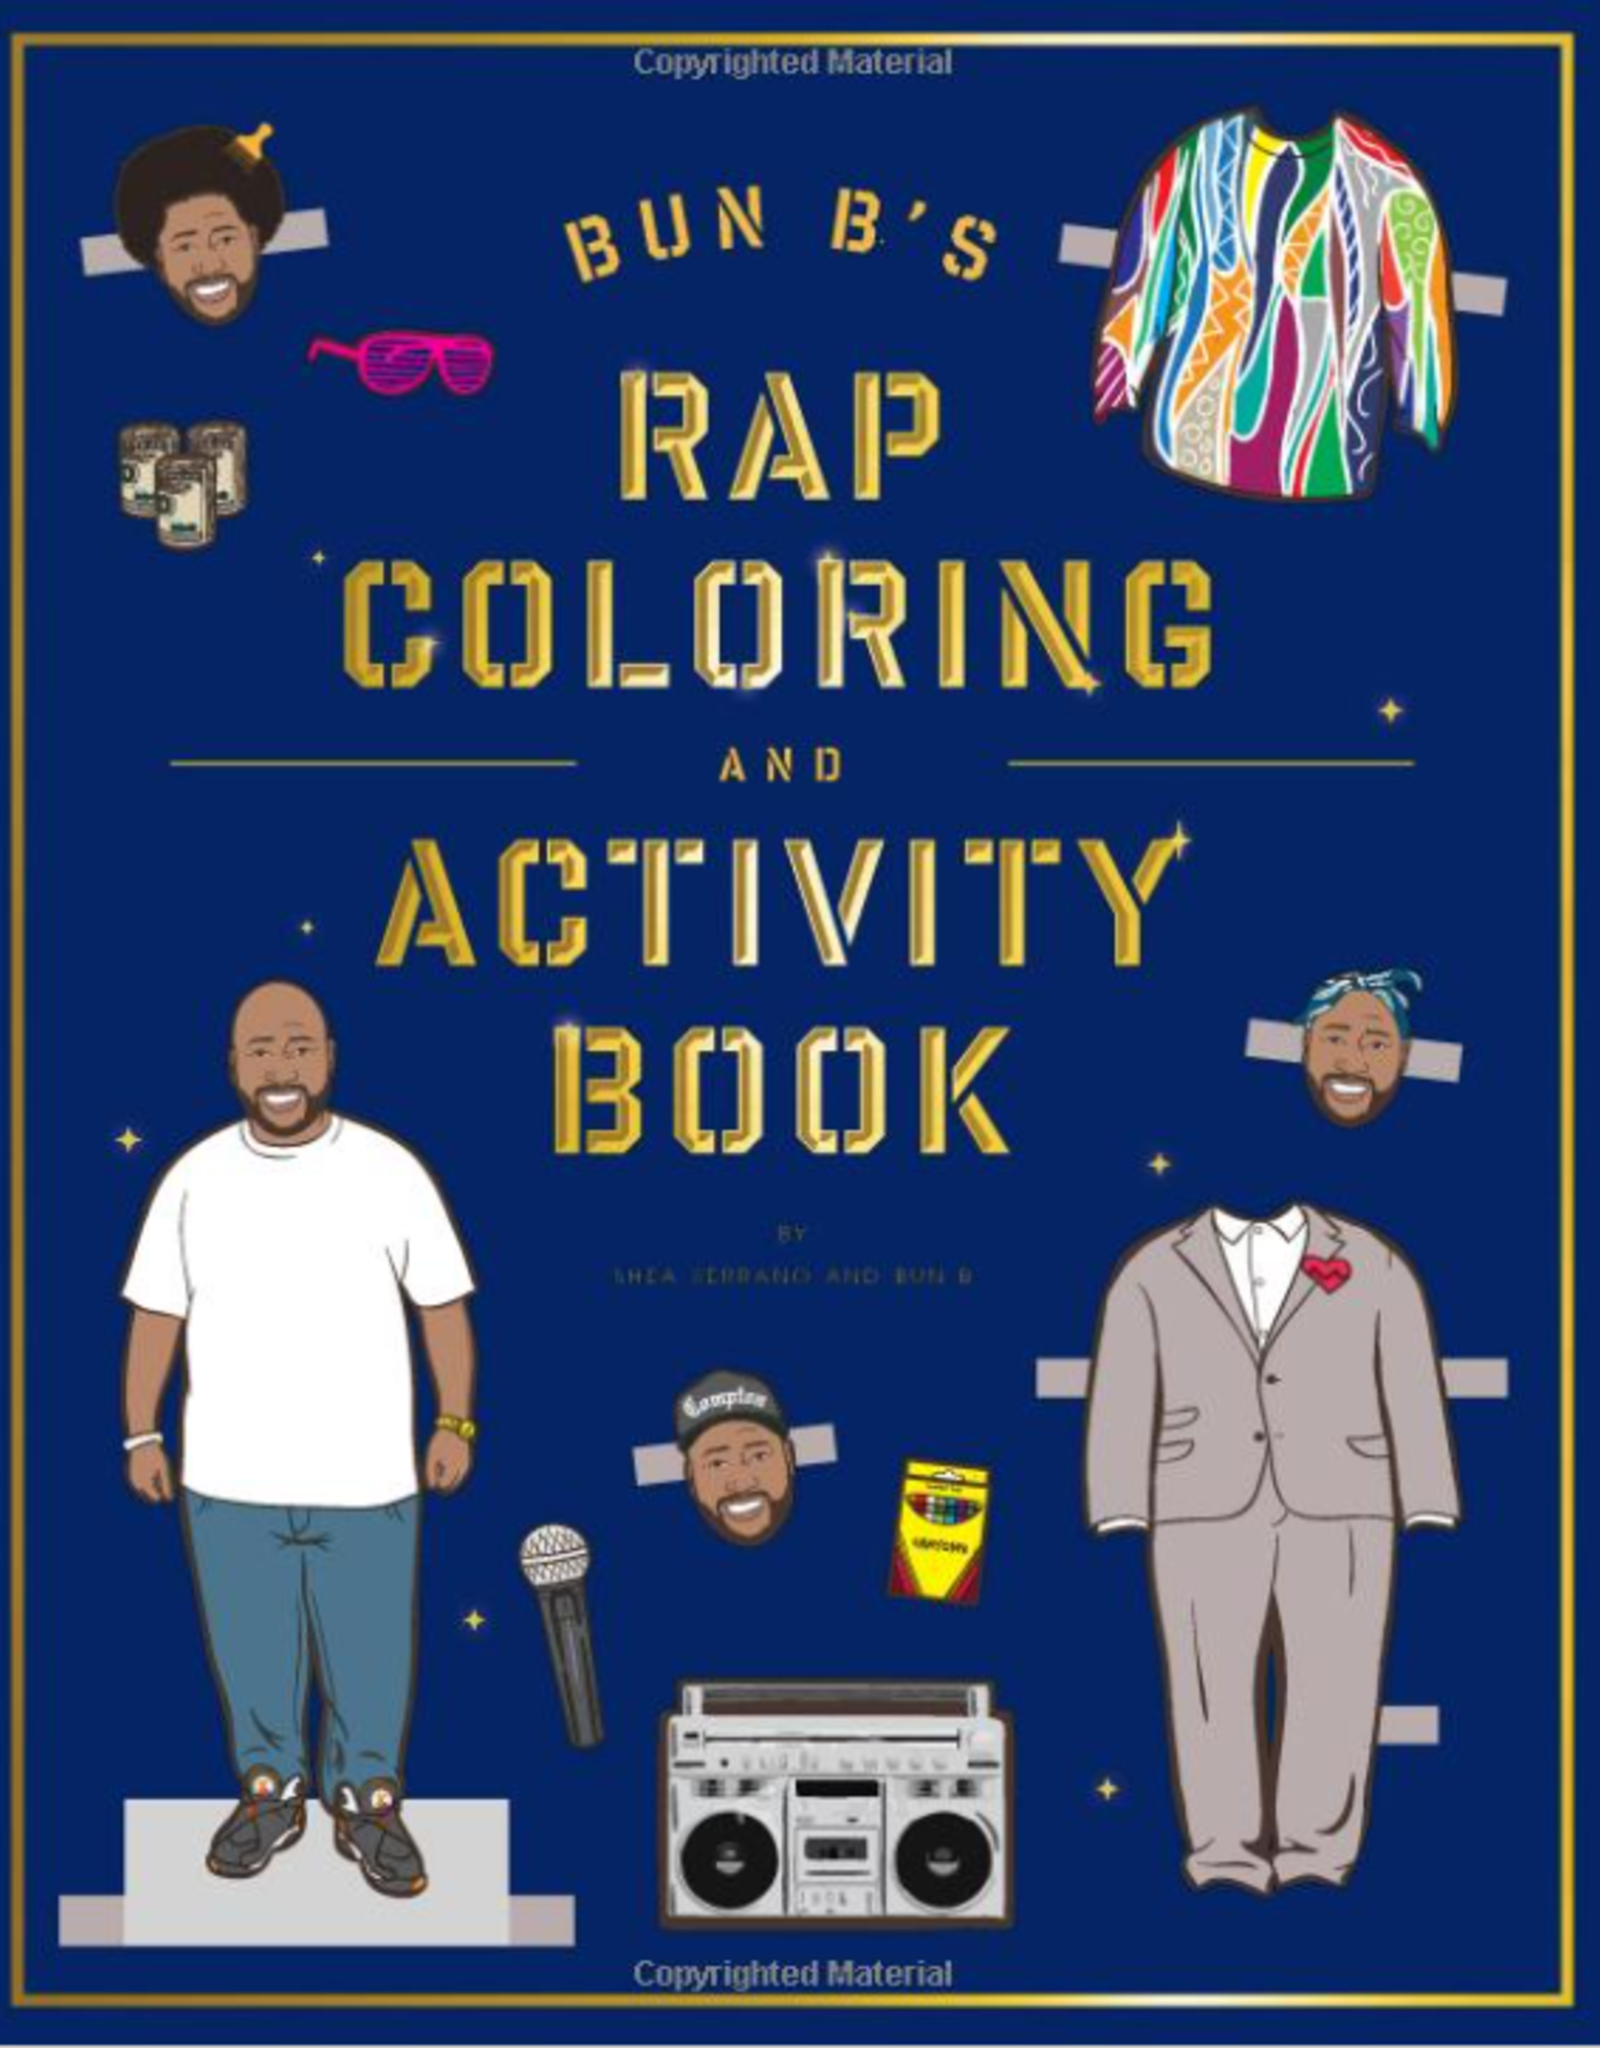 Chronicle Books Bun B's Rap Coloring Book